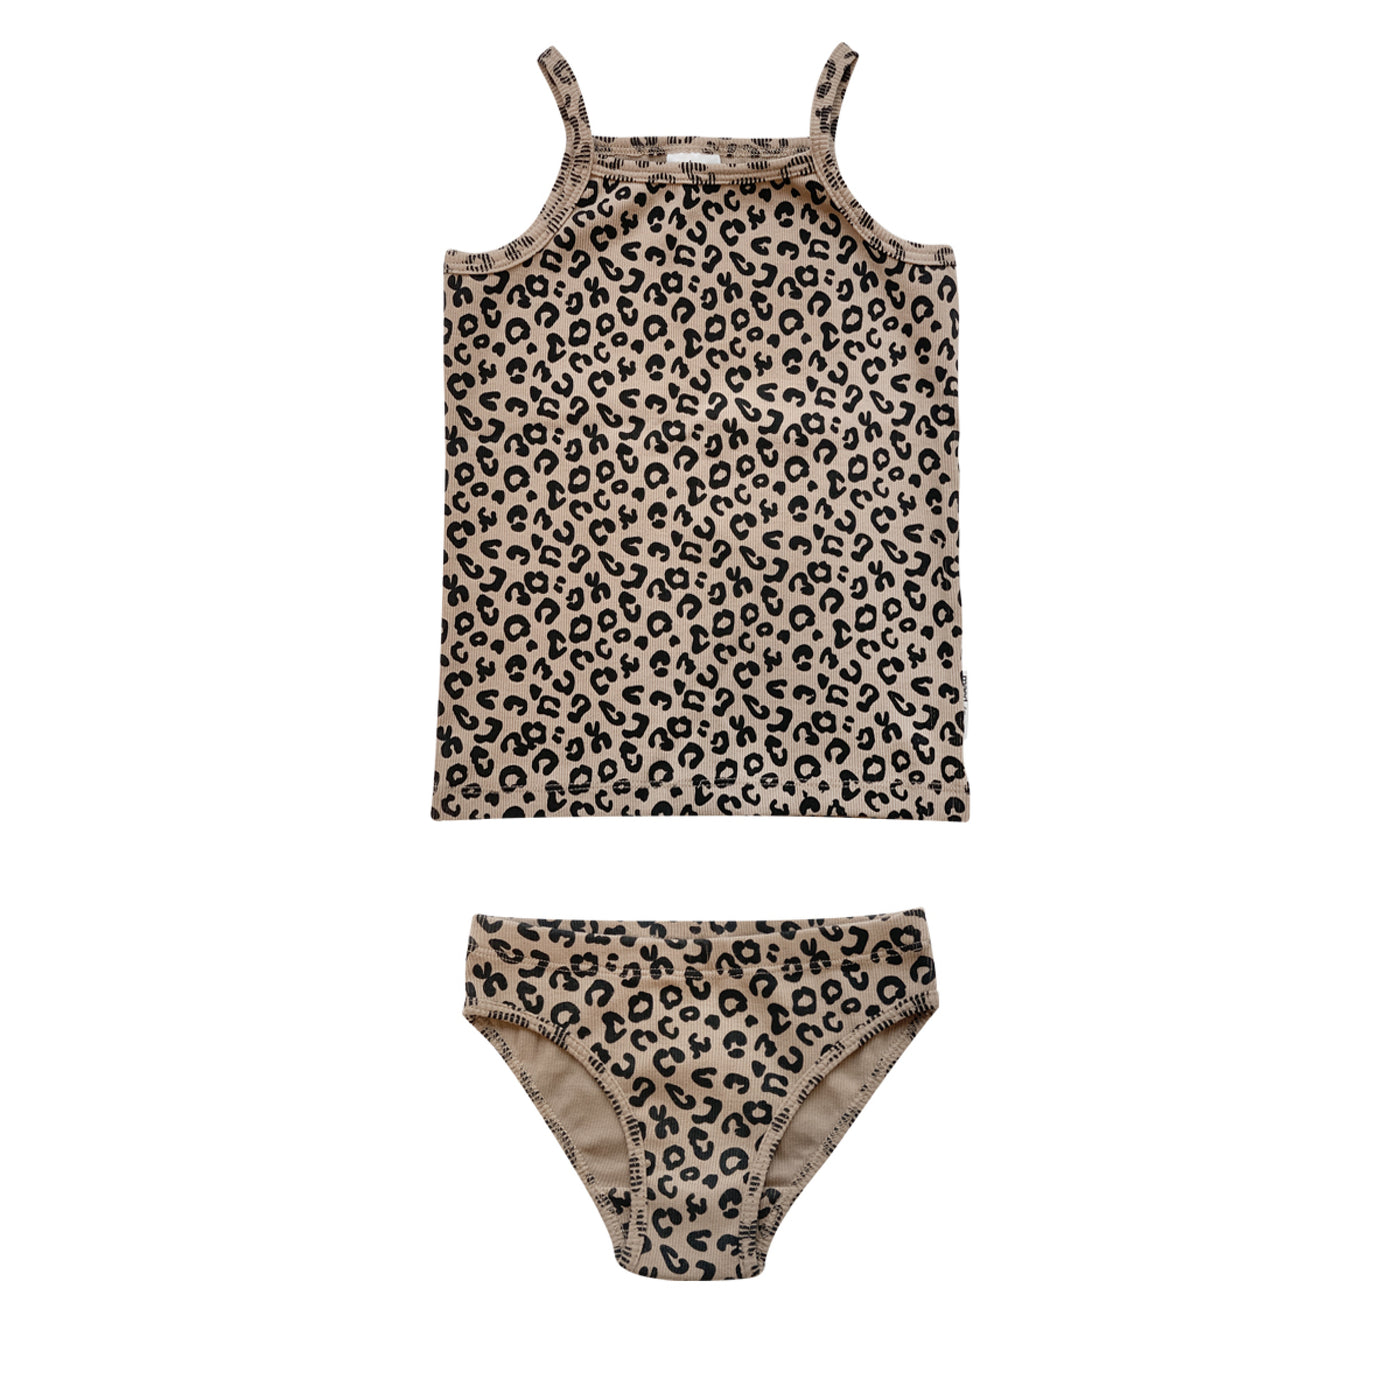 Maed for mini - Brown leopard undies girls / 2y & 3y